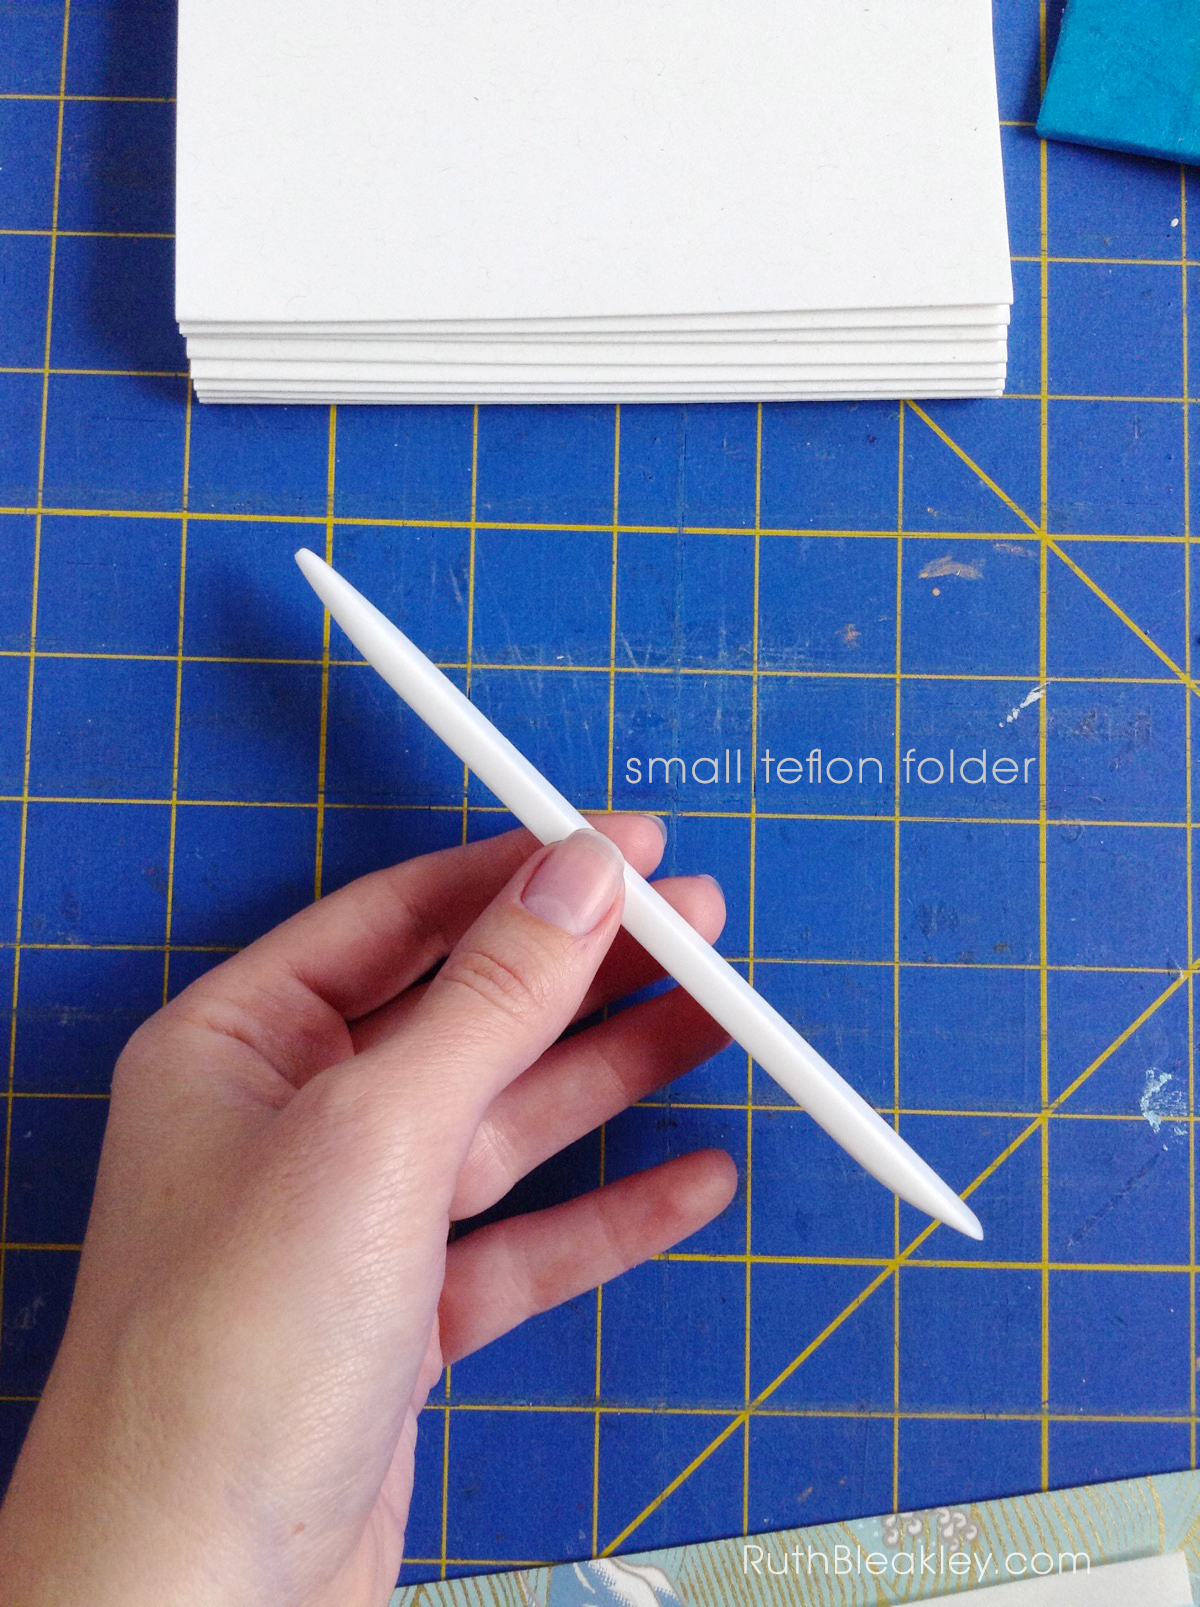 Teflon folder side view - essential bookbinding tool